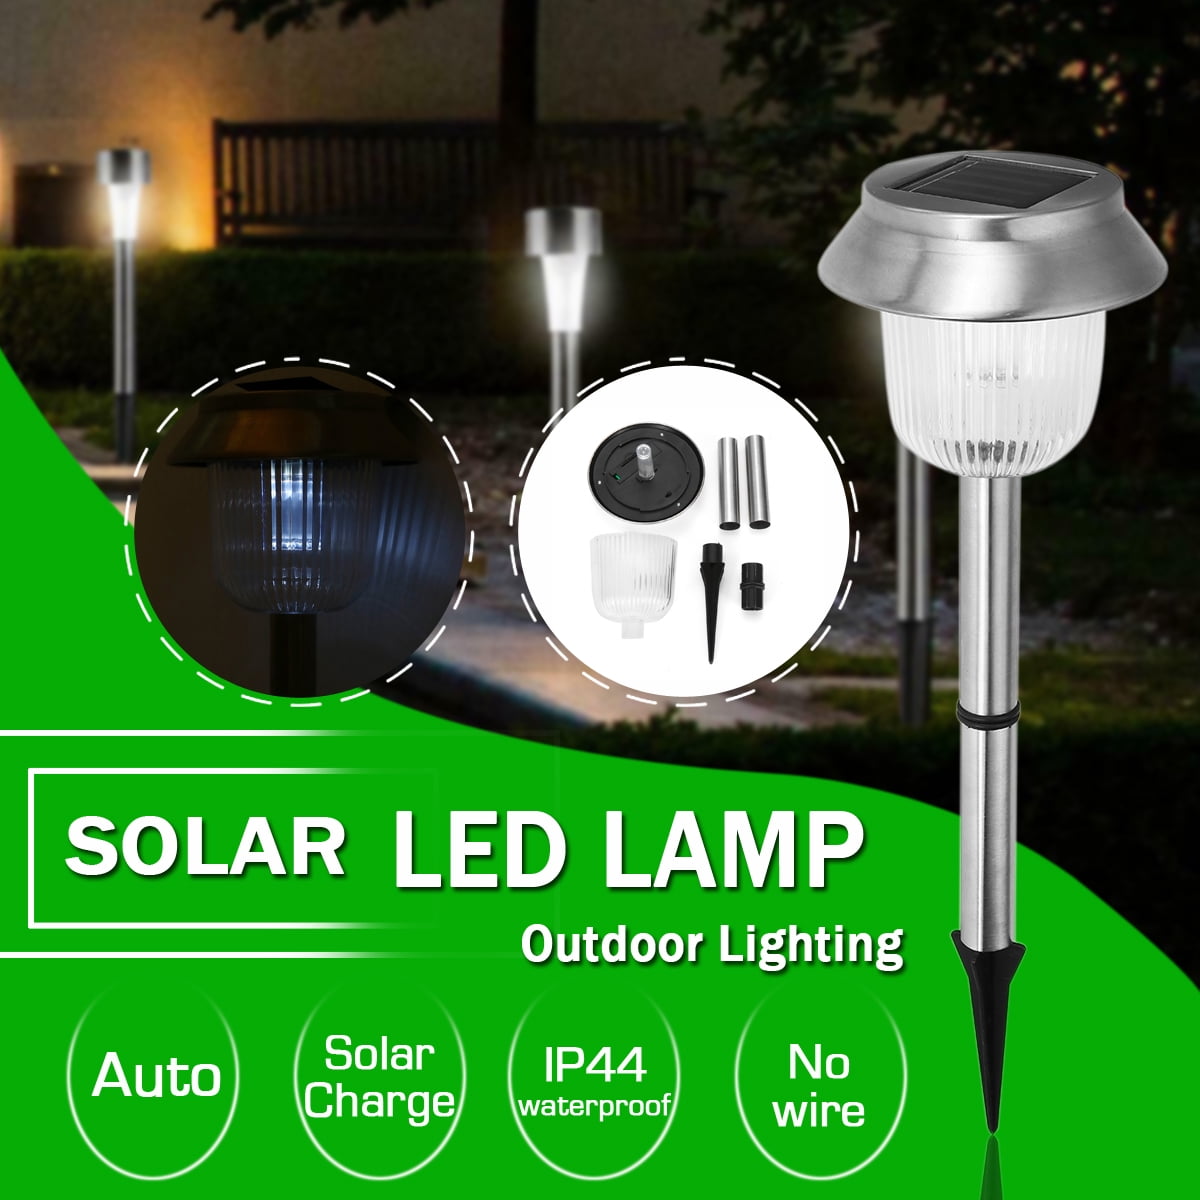 LED Road Street Flood Light Industrial Lamp Outdoor Garden Yard AC85-265V/DC12V